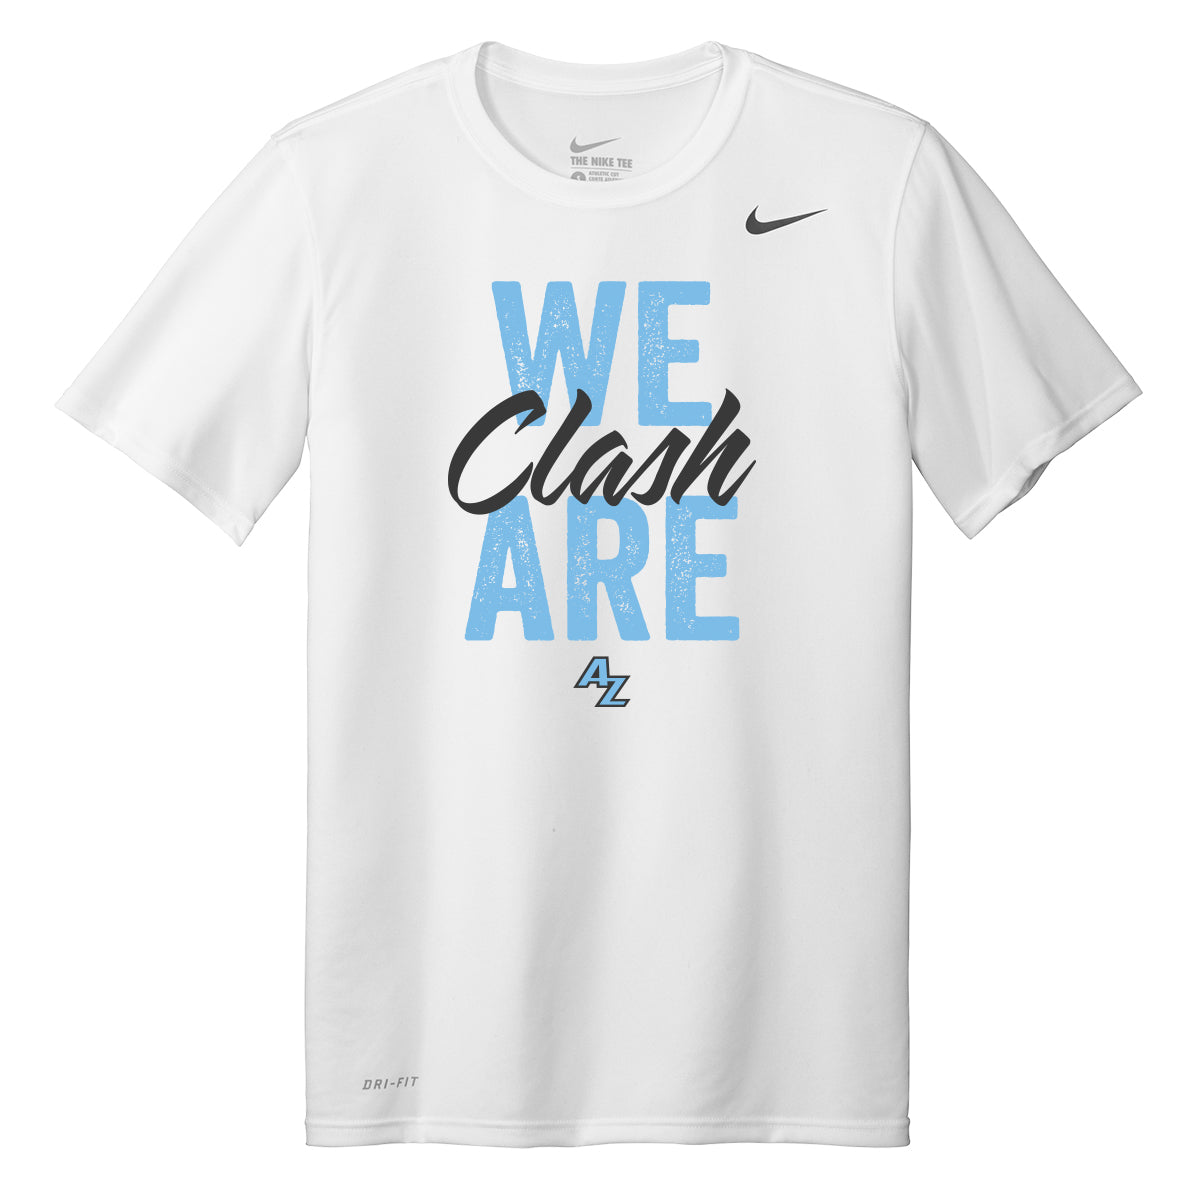 We are Clash Nike Dri-Fit Tee